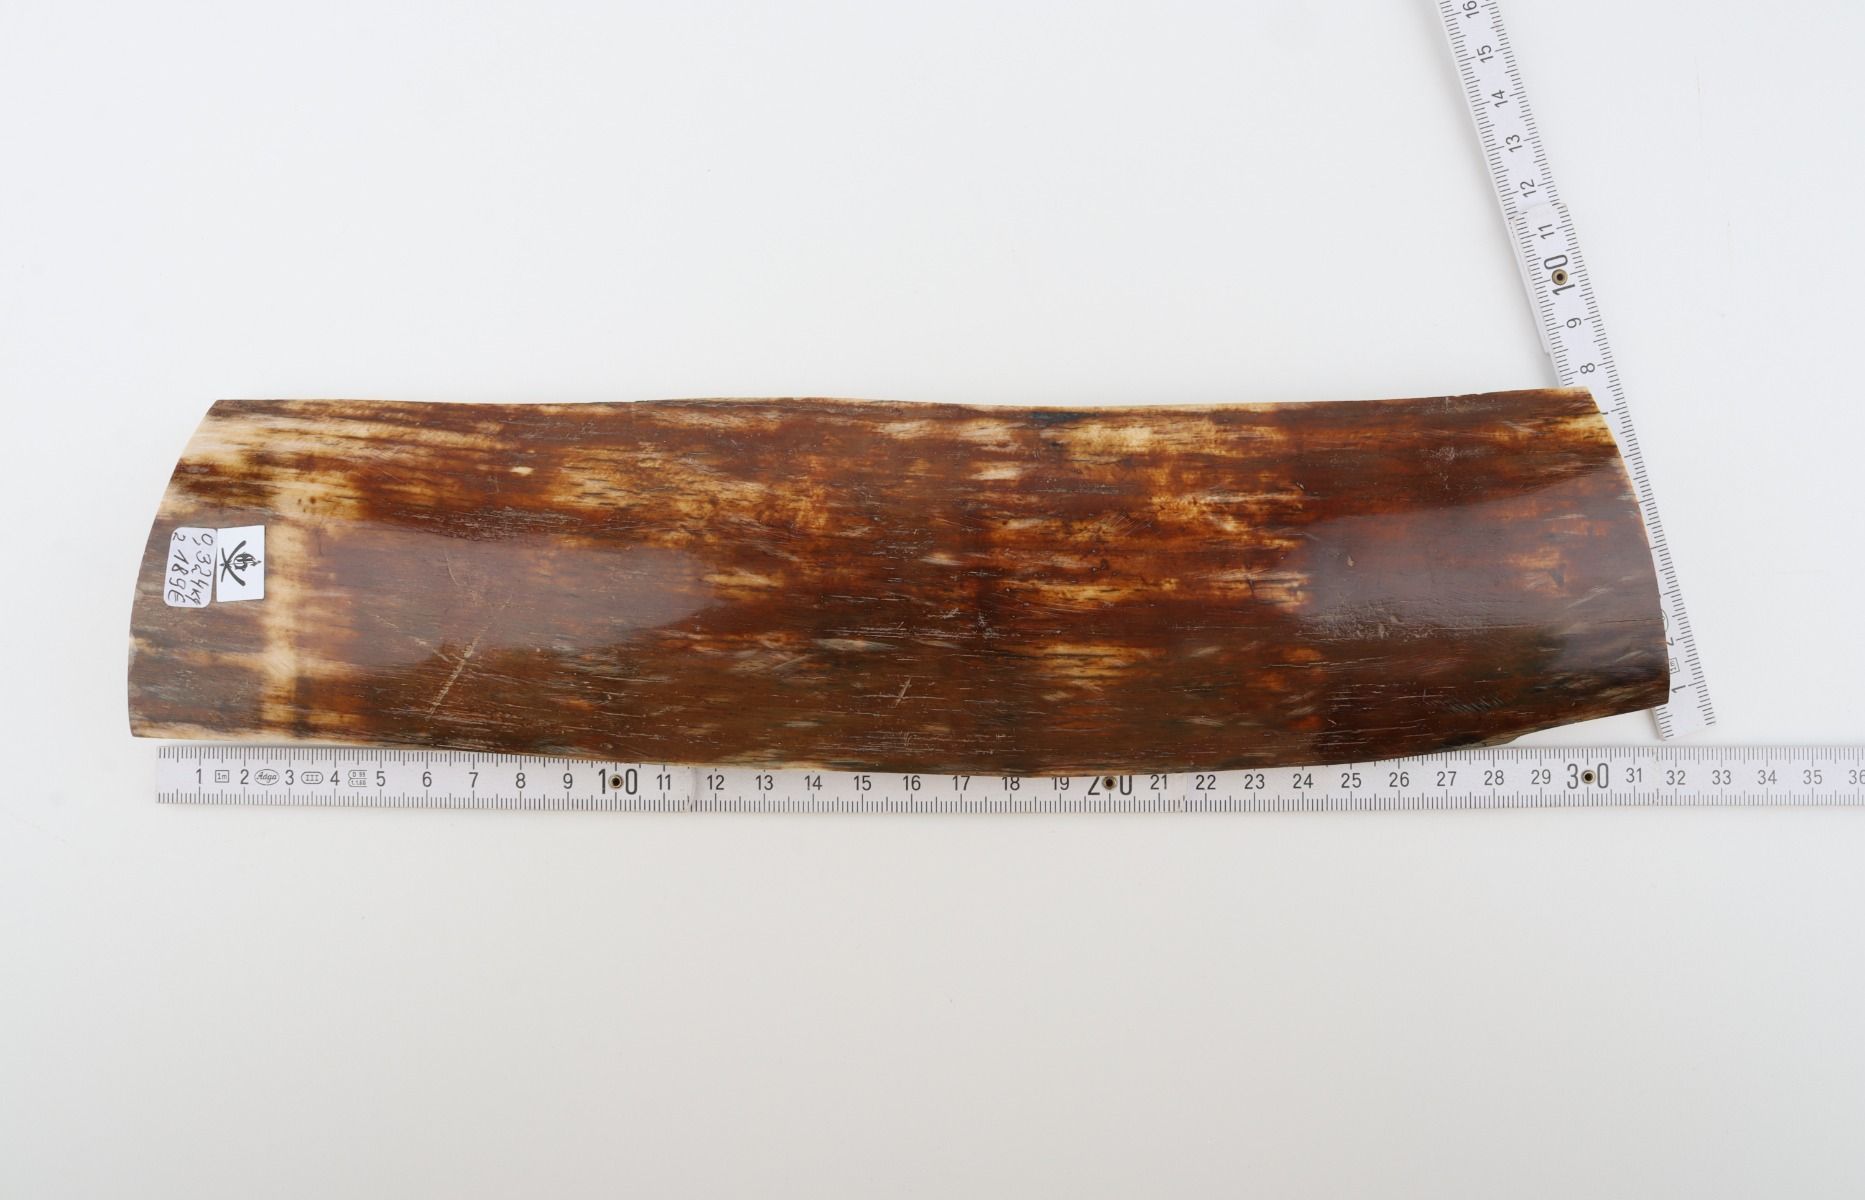 Orange-brown mammoth bark